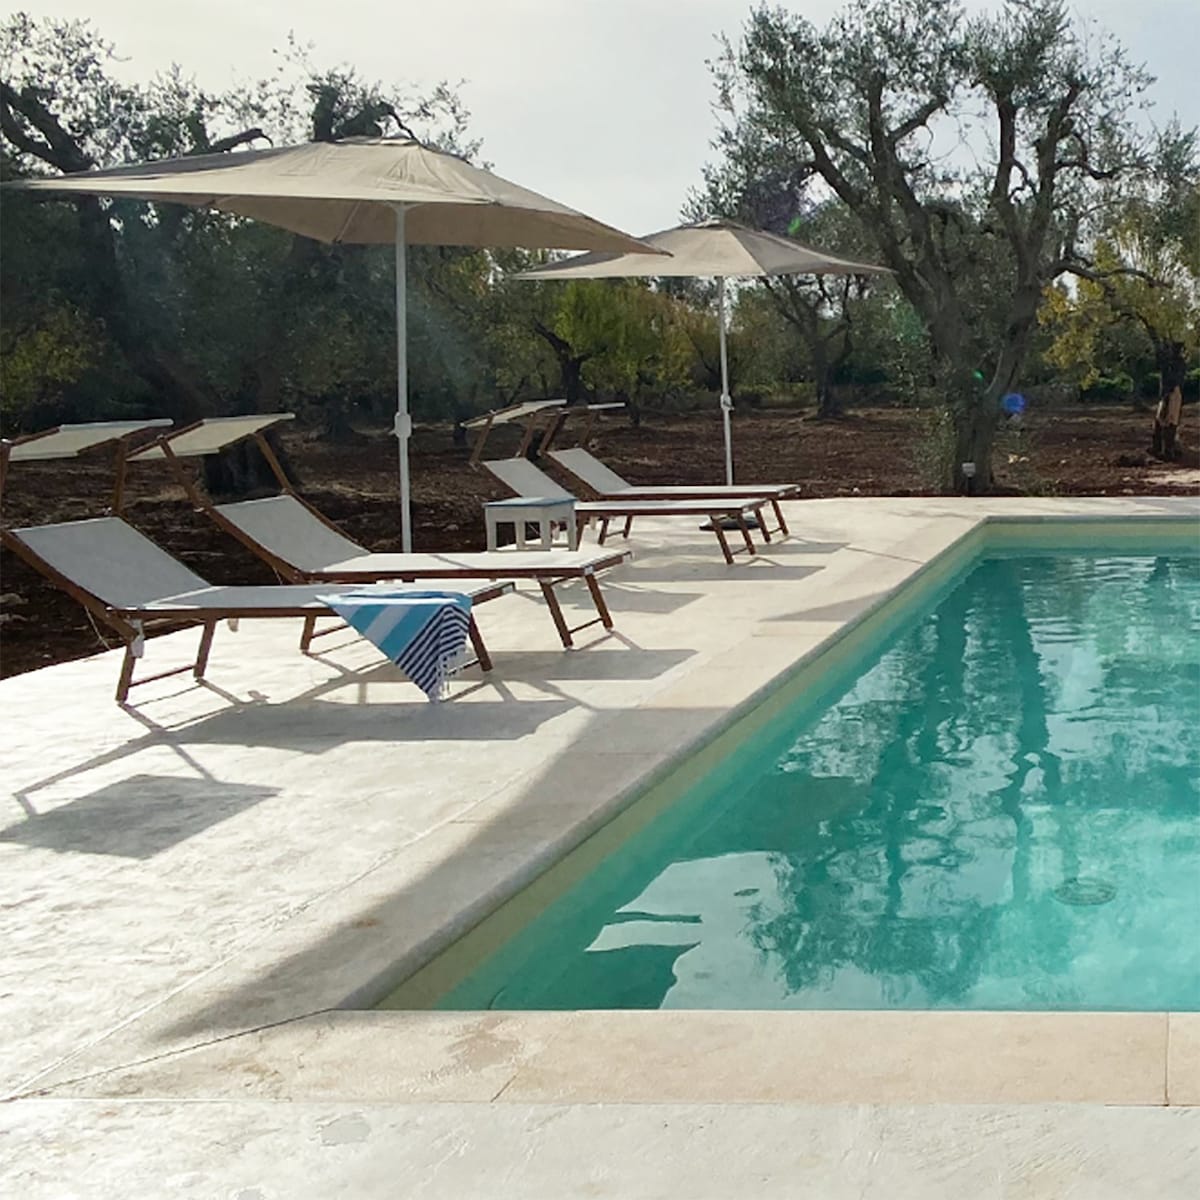 Trullo fiorone, modern comfort, garden and pool